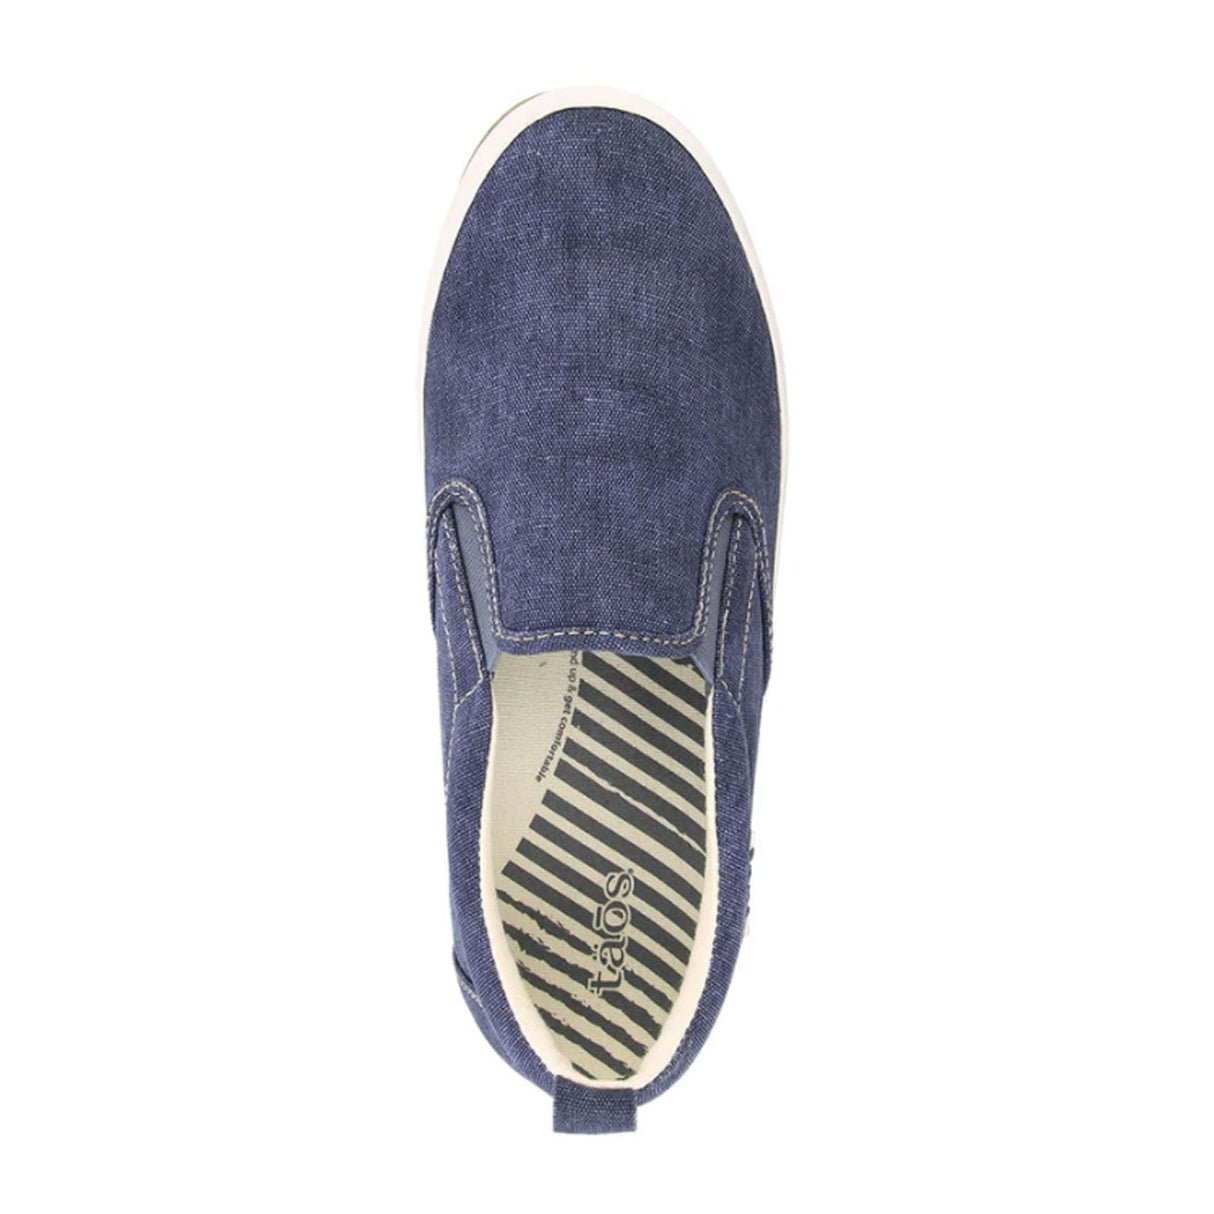 Taos Dandy Slip On Sneaker (Women) - Blue Washed Canvas Dress-Casual - Slip Ons - The Heel Shoe Fitters